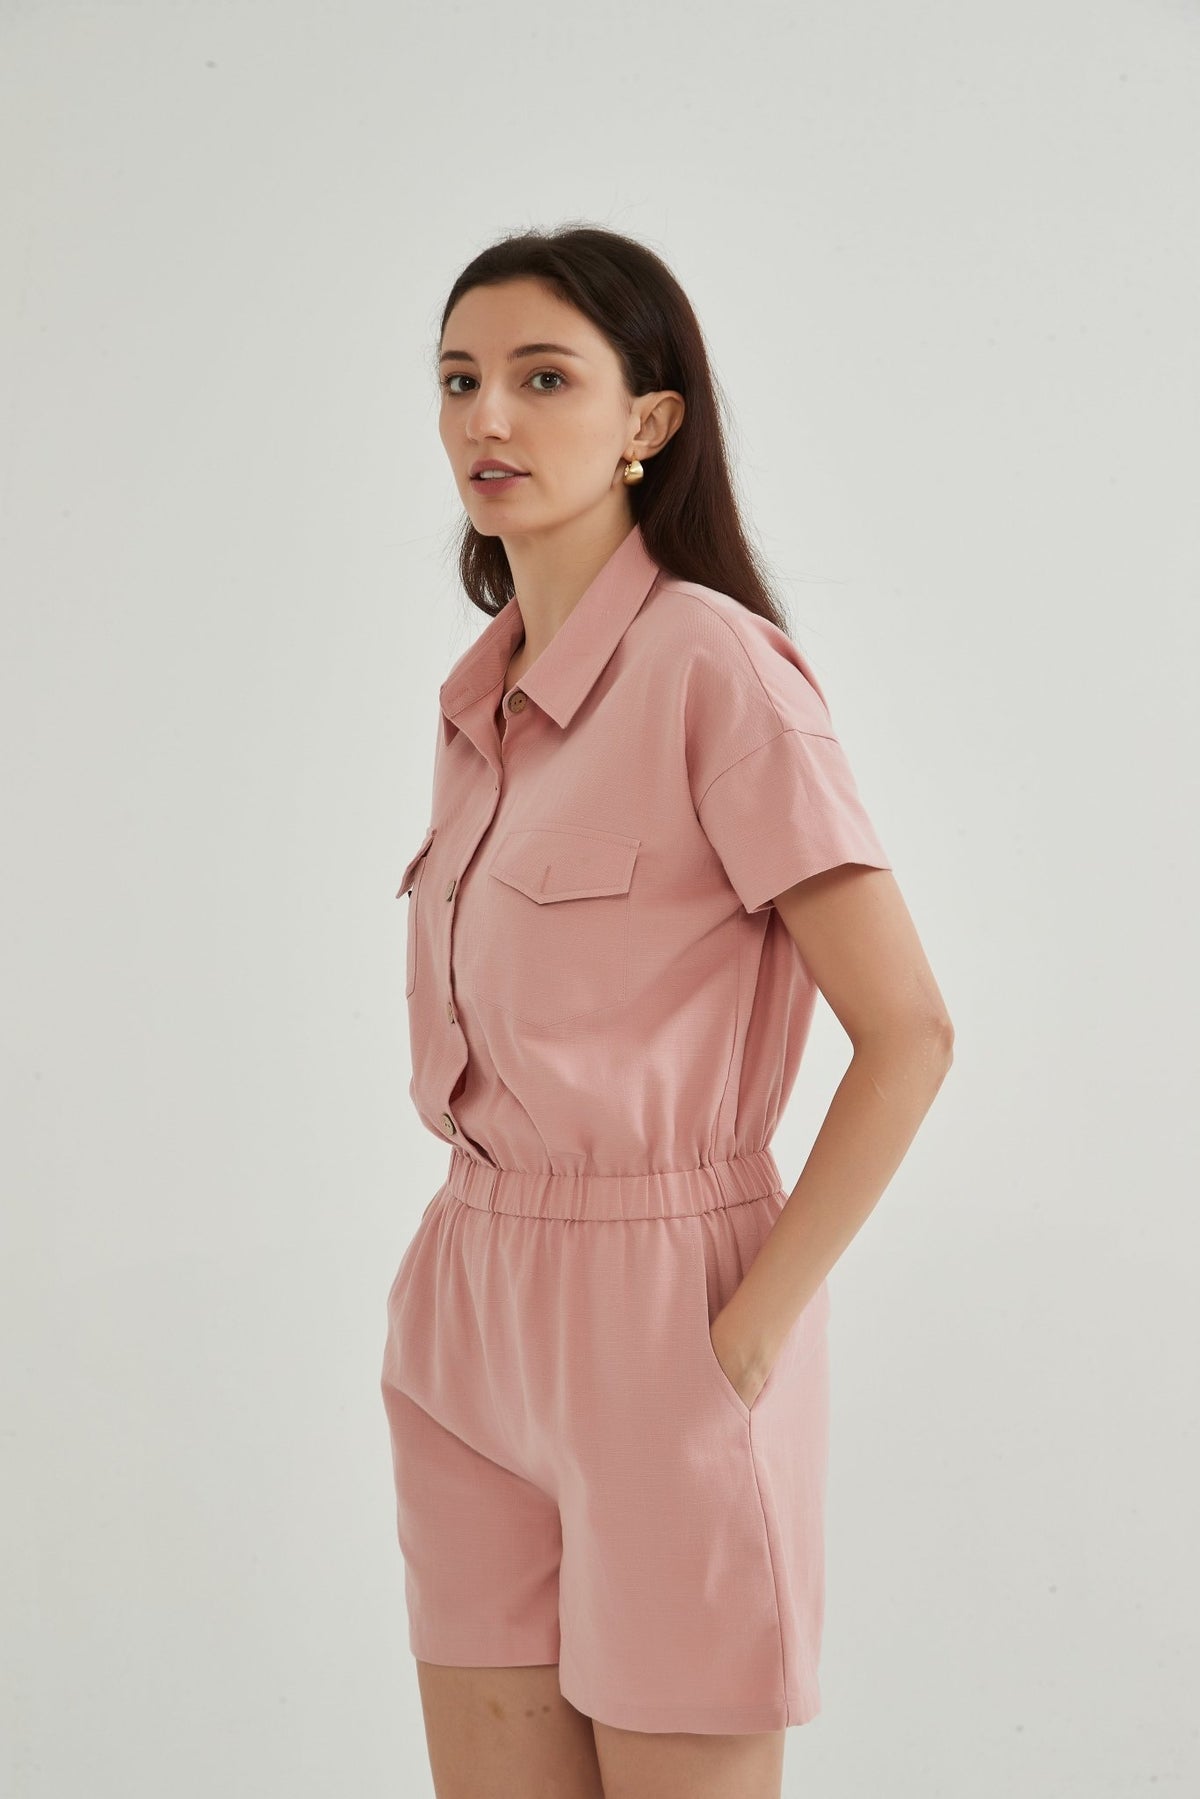 Pre-order Jane Cap Sleeve Pink Color Jumpsuit - Whisper Mint